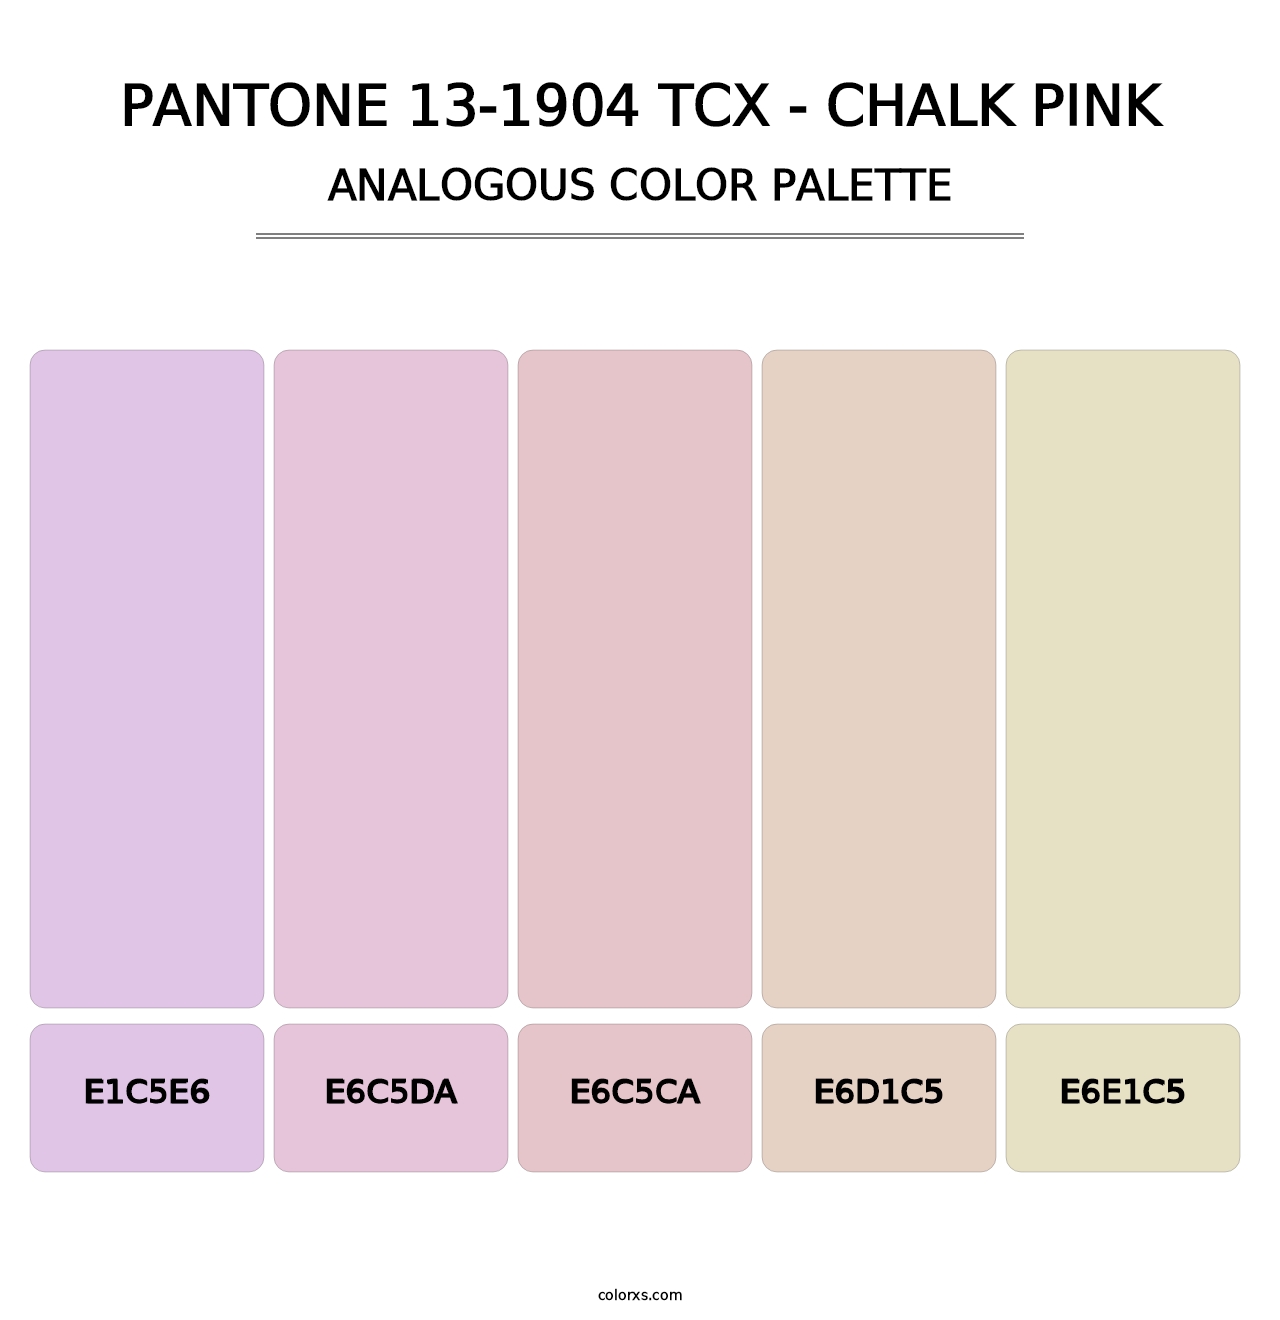 PANTONE 13-1904 TCX - Chalk Pink - Analogous Color Palette